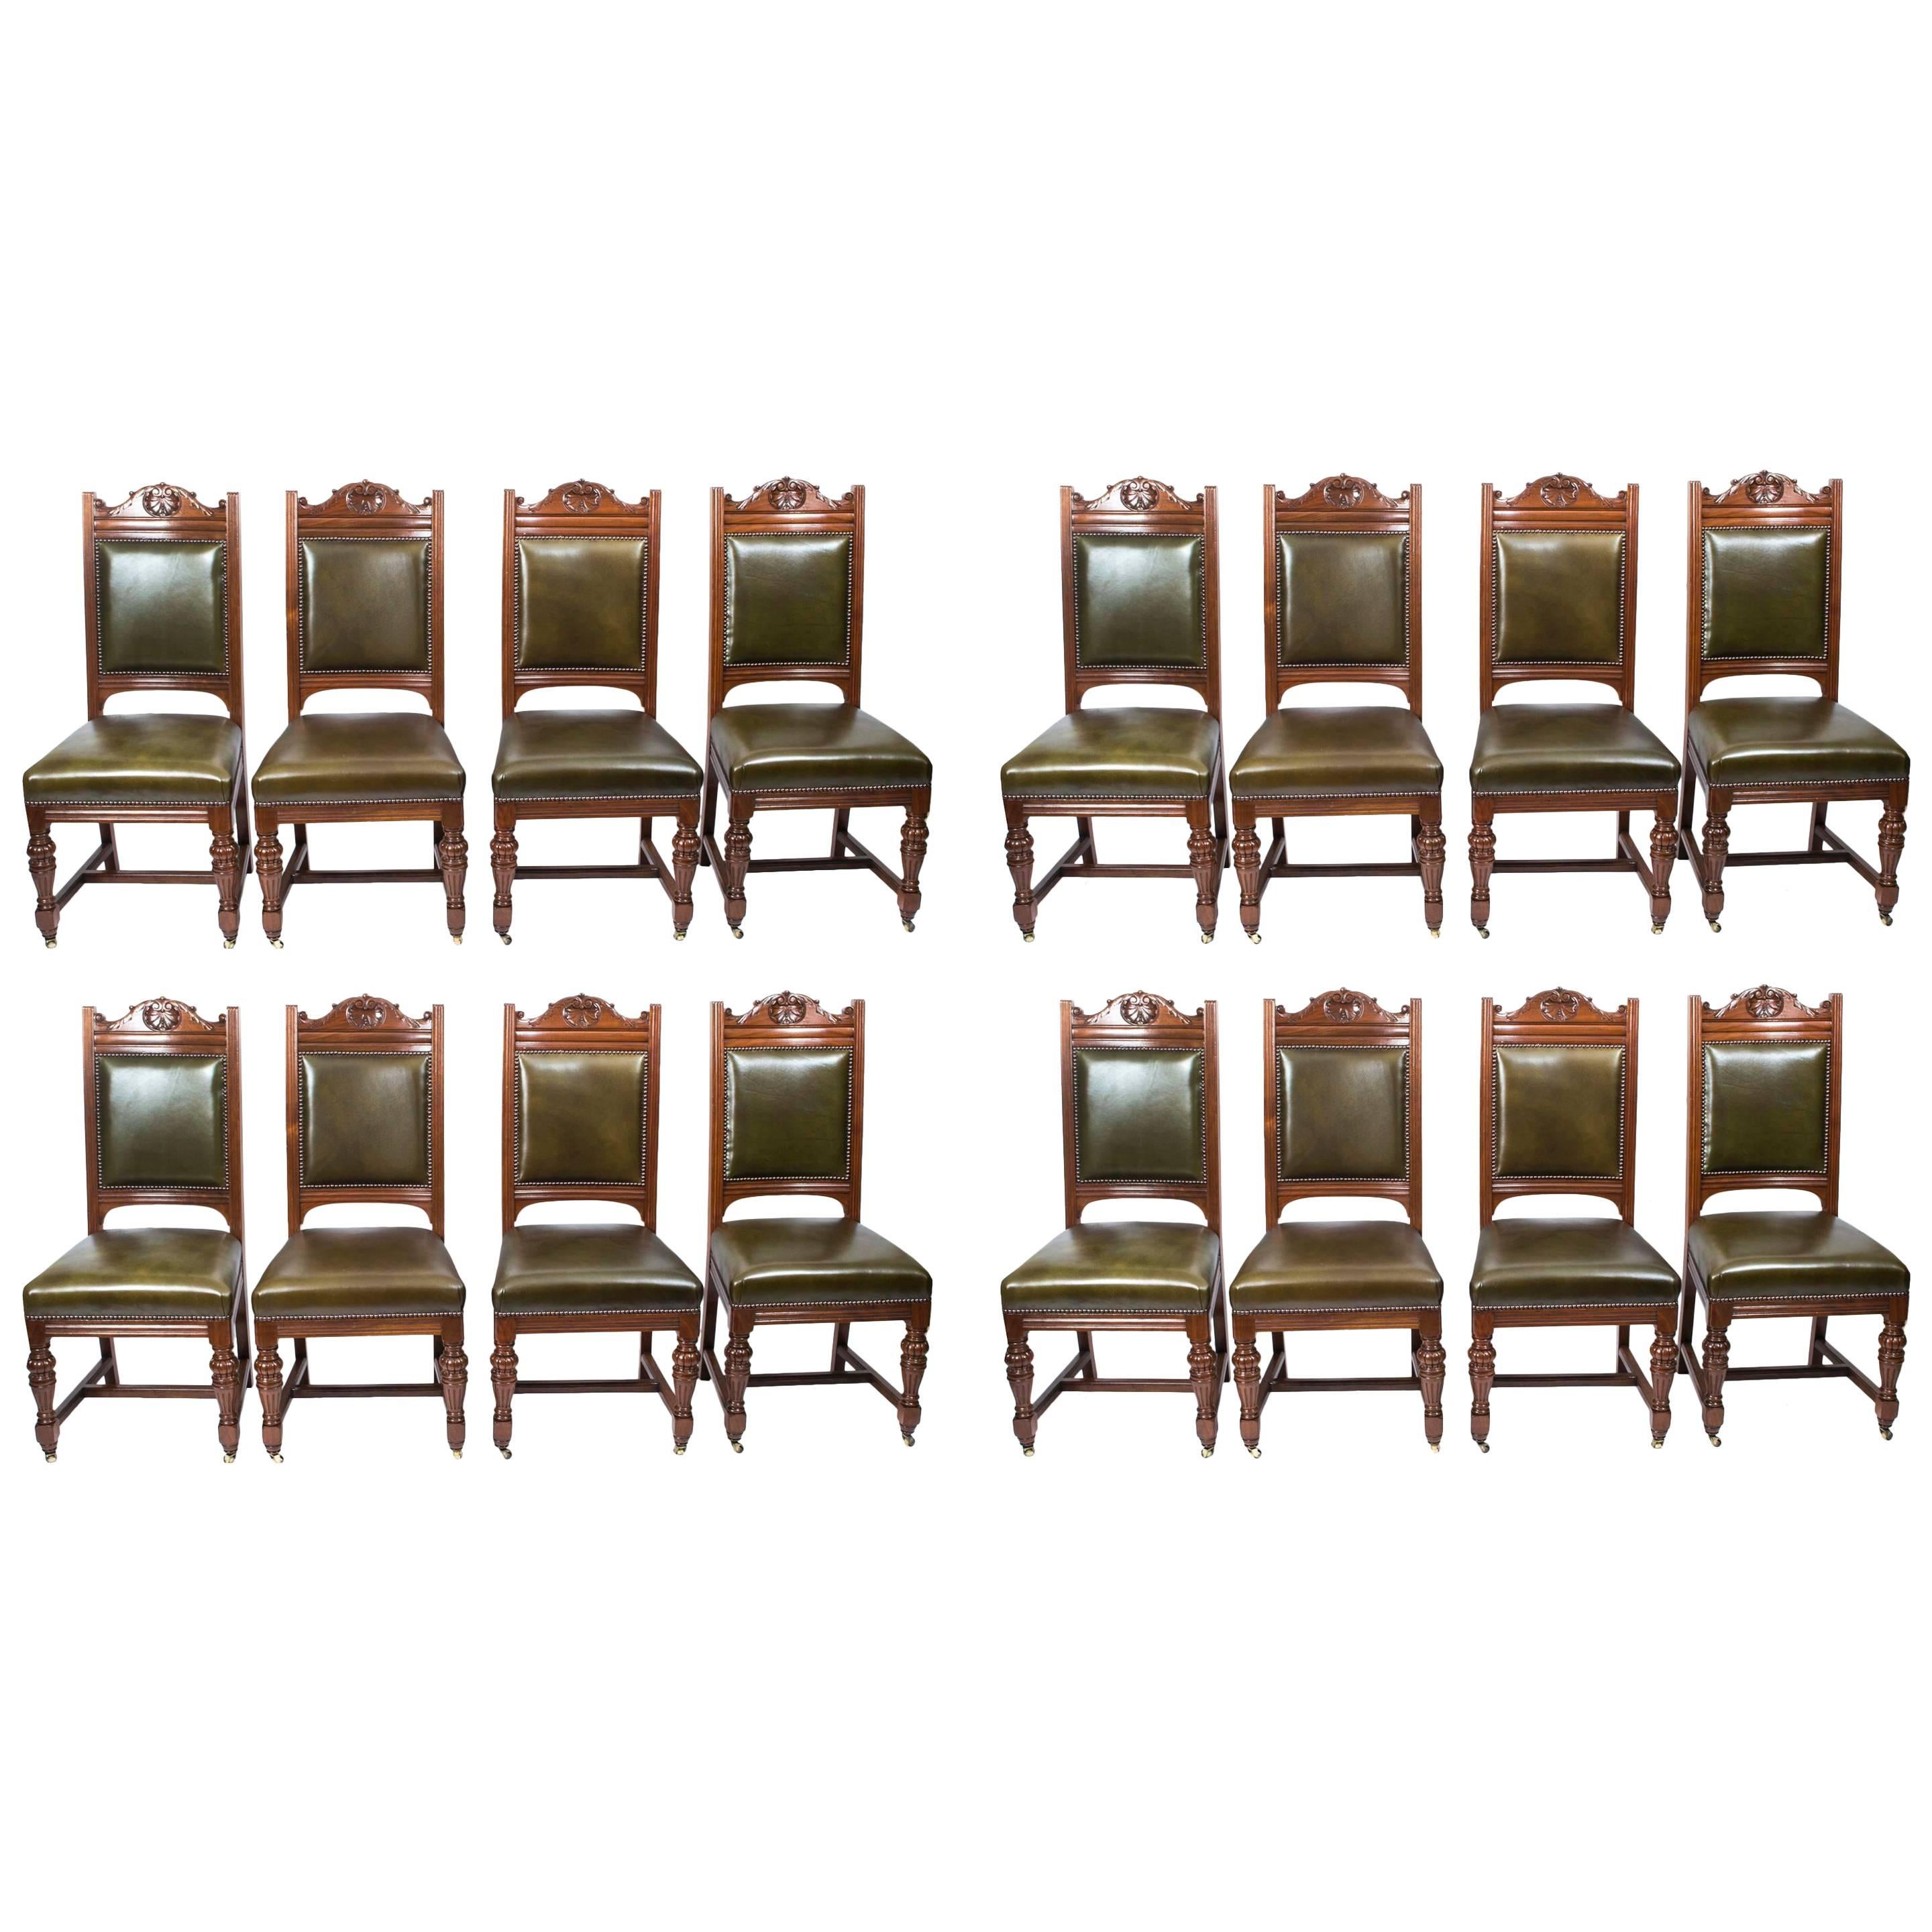 Antique Set of 16 Victorian Walnut Dining Chairs, circa 1850